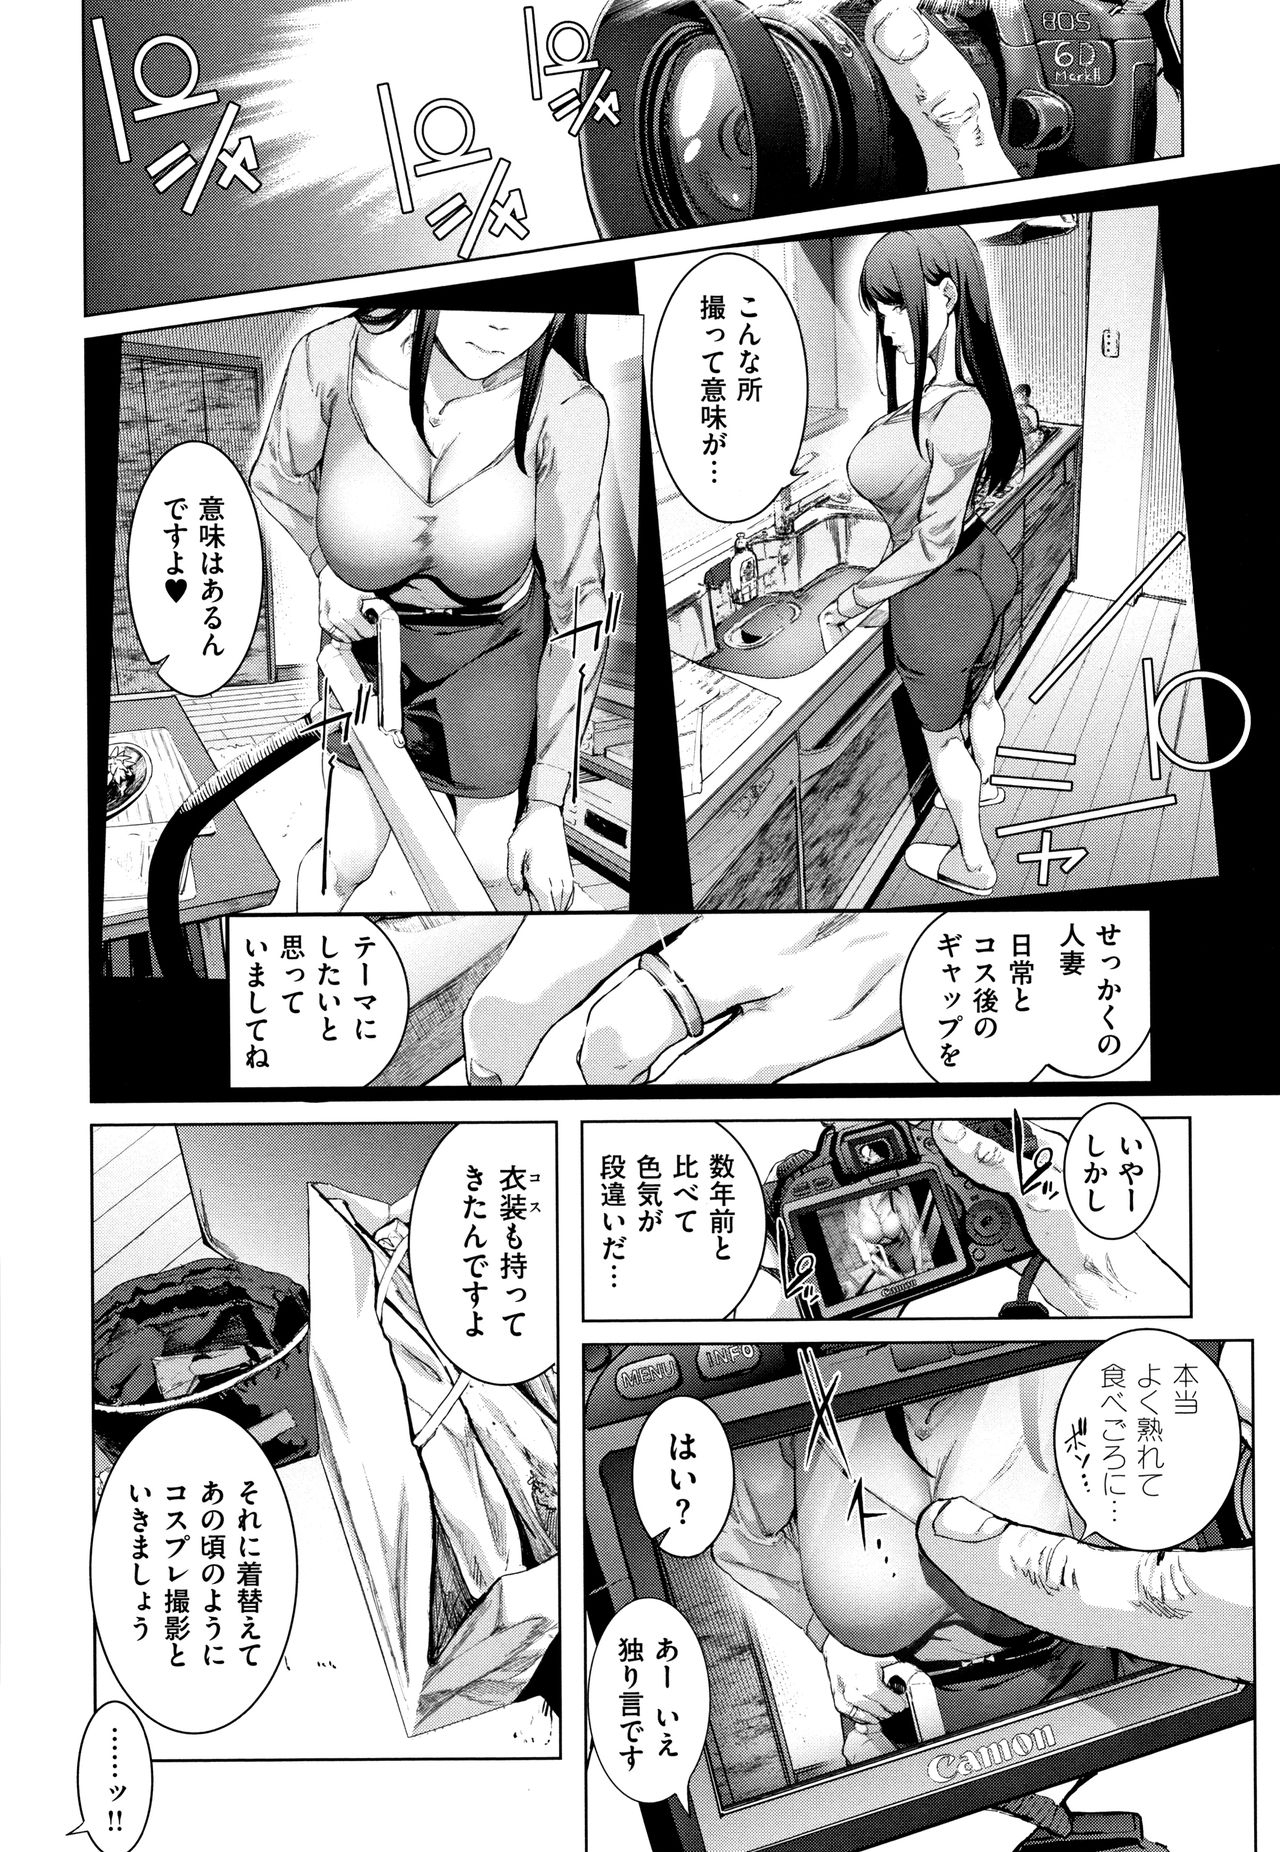 [Suzuhane Suzu] Cos wa Midara na Kamen Shogyouban - Cosplay is a mask [wakes up erotic personality...] 42